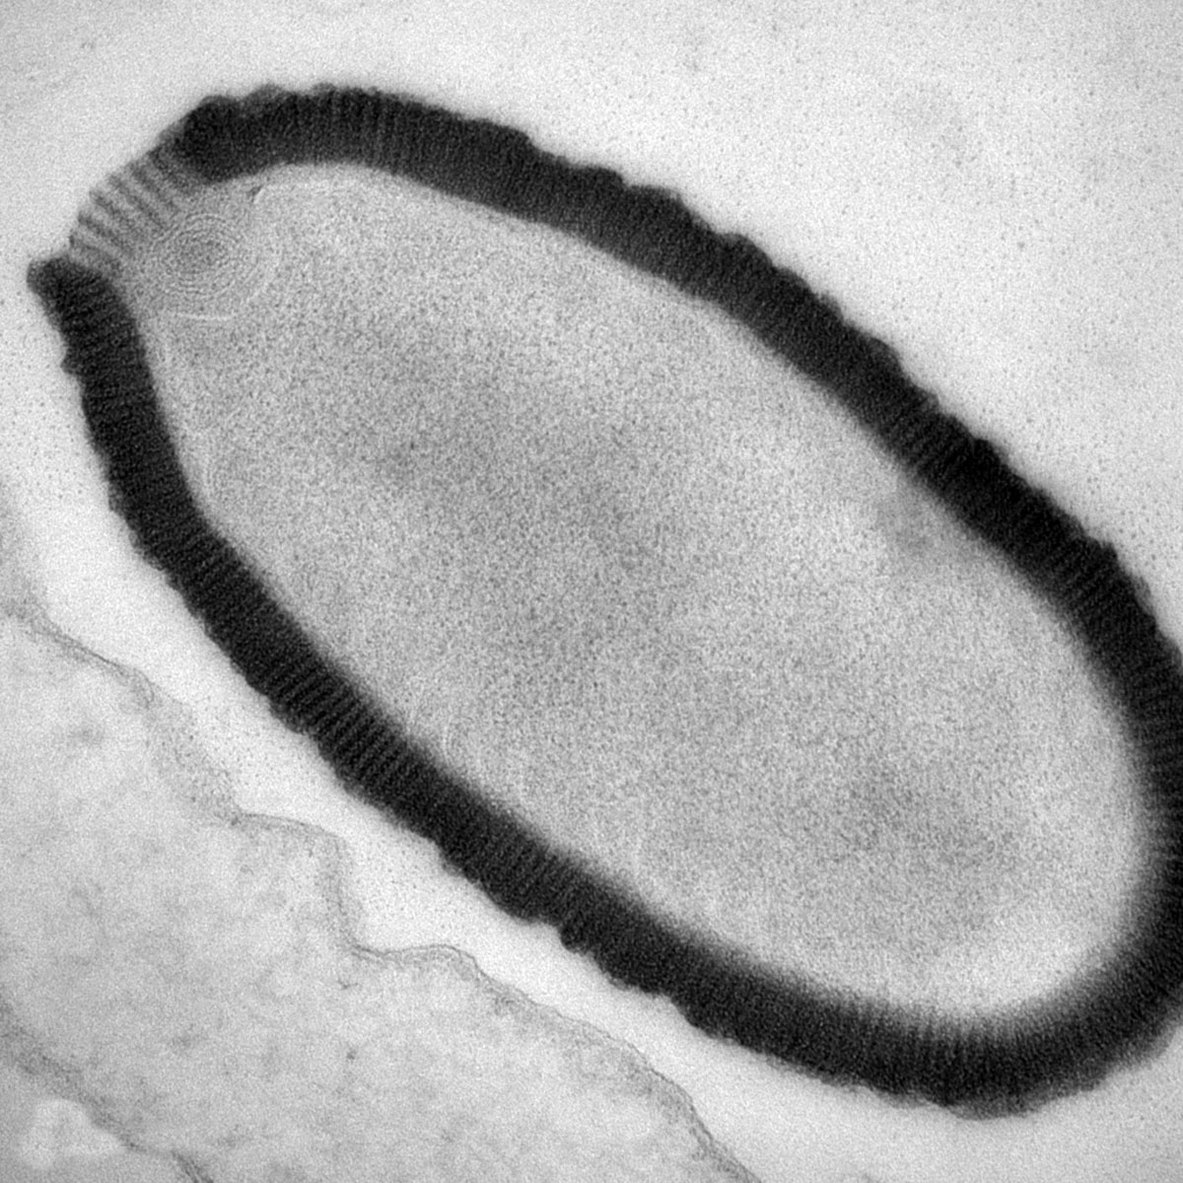 An ultrathin section of a Pithovirus particle in an infected Acanthamoeba castellanii cell. Image: Julia Bartoli and Chantal Abergel, IGS and CNRS-AMU